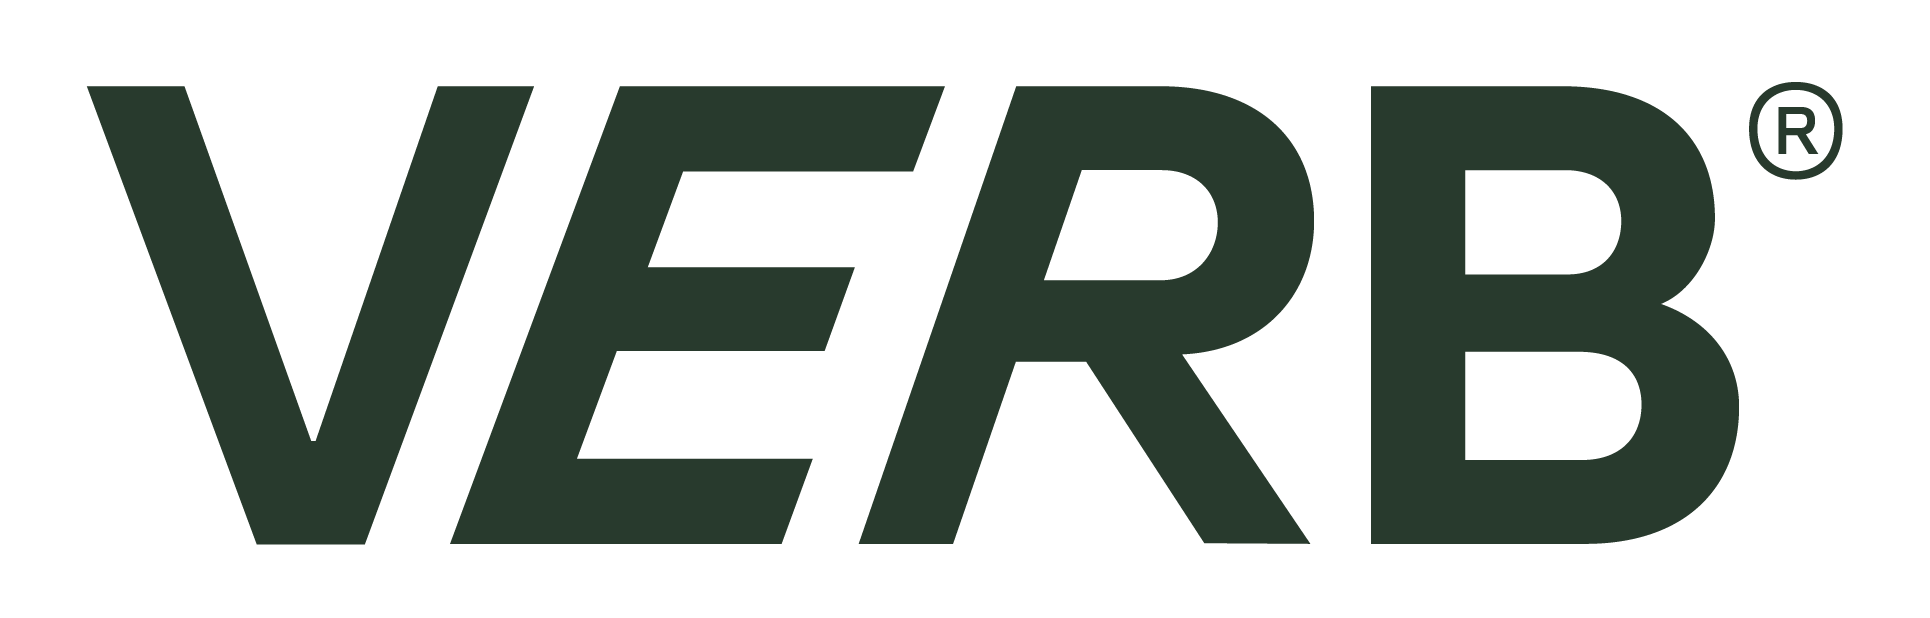 Verb_Logo_R_Green-1.png